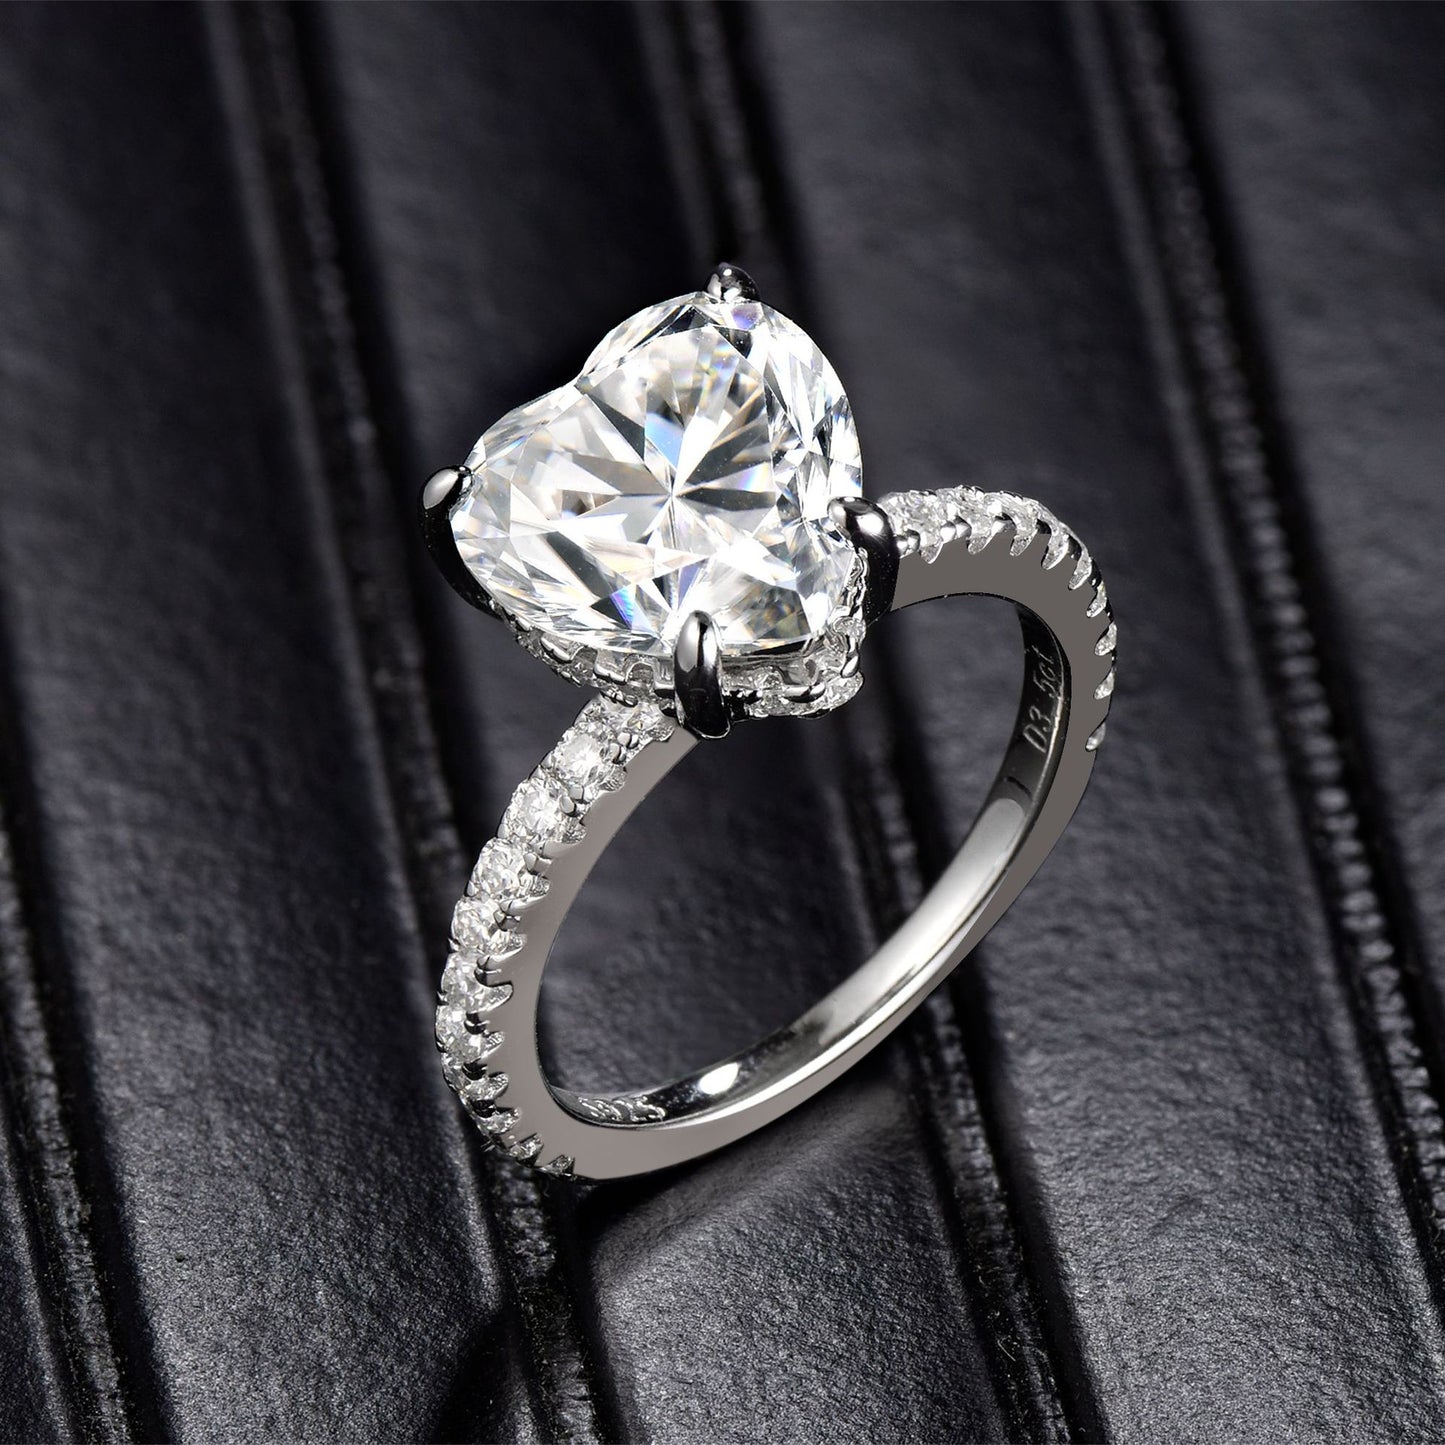 9.5mm heart shape 3.5ct moissanite S925 silver plated 18k white gold engagement ring women